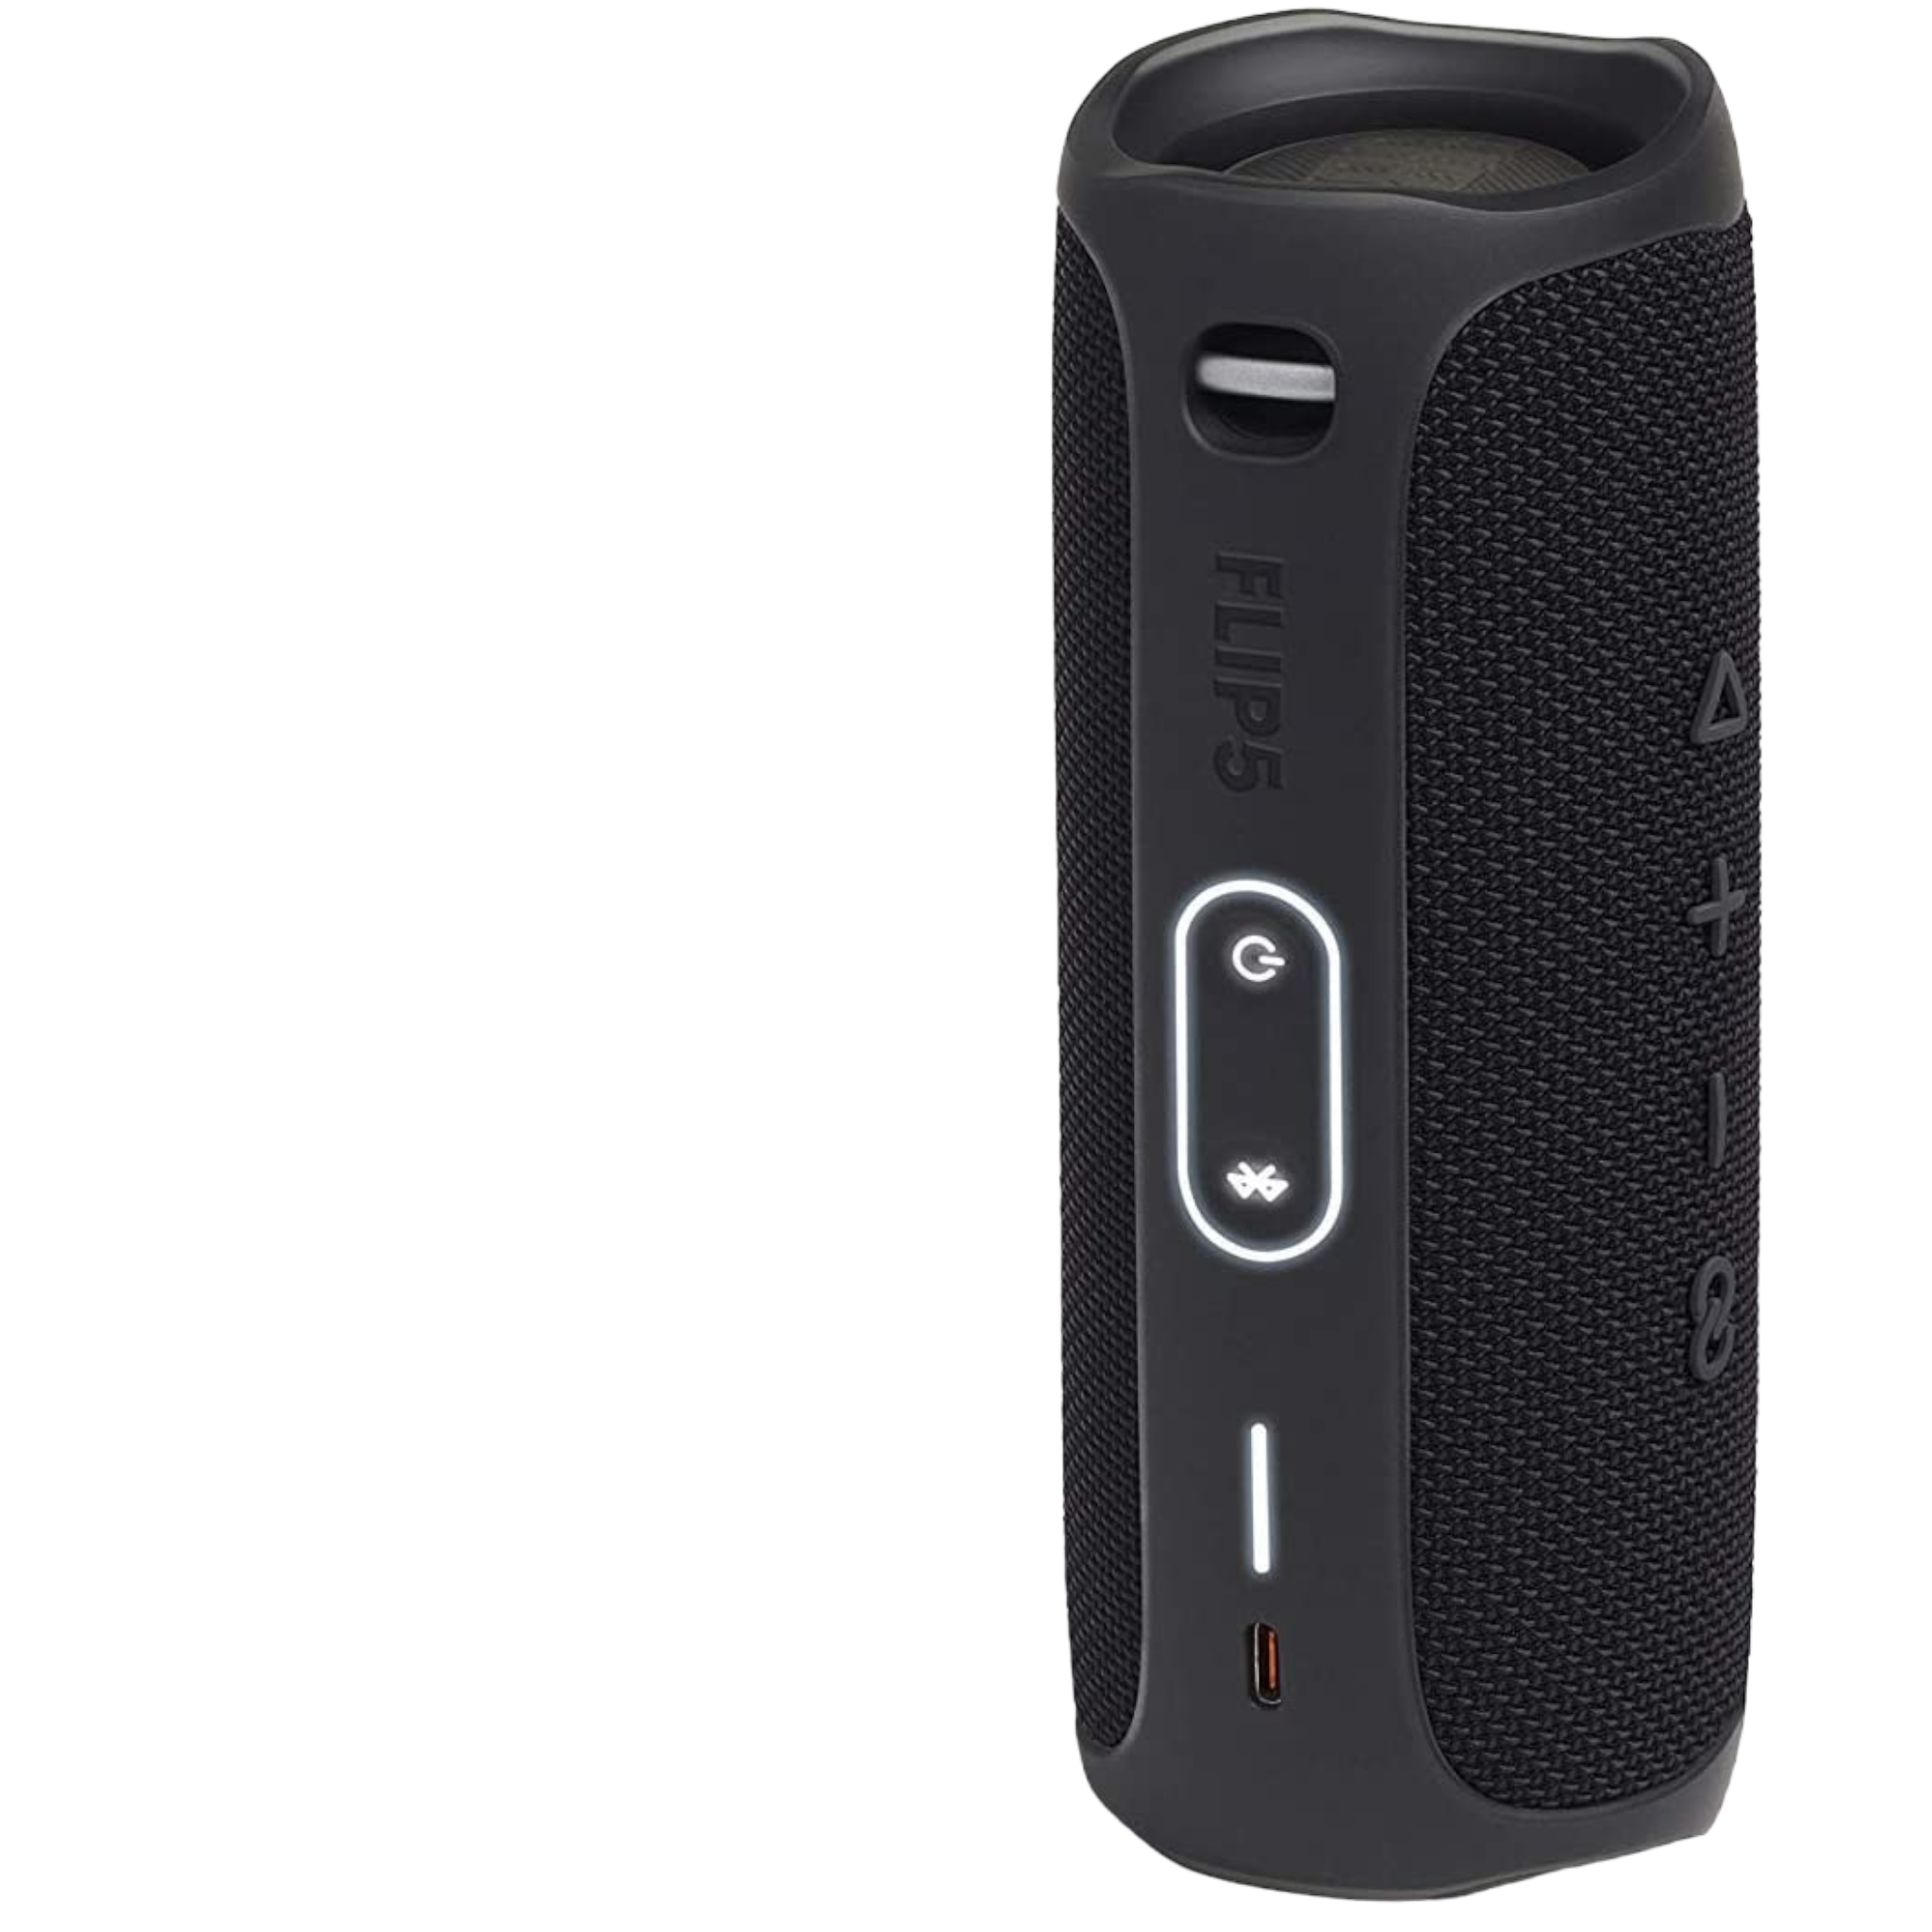 2 Pack JBL Flip 5 Waterproof Portable Wireless Bluetooth Speaker Bundle - Black - Pro-Distributing